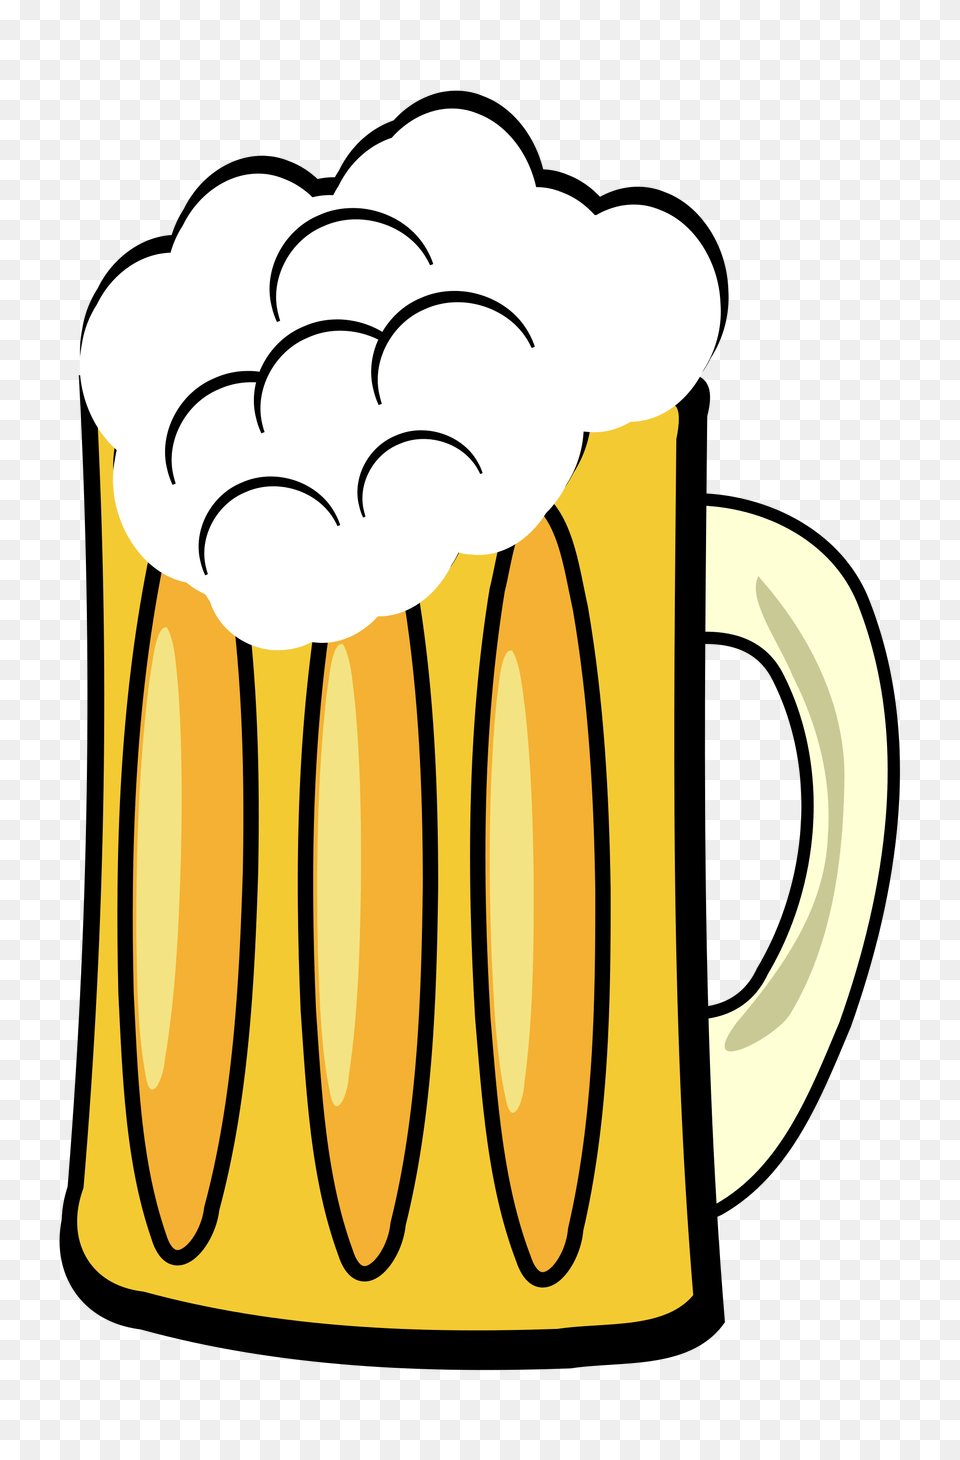 Frosty Beer Mug, Cup, Alcohol, Beverage, Glass Png